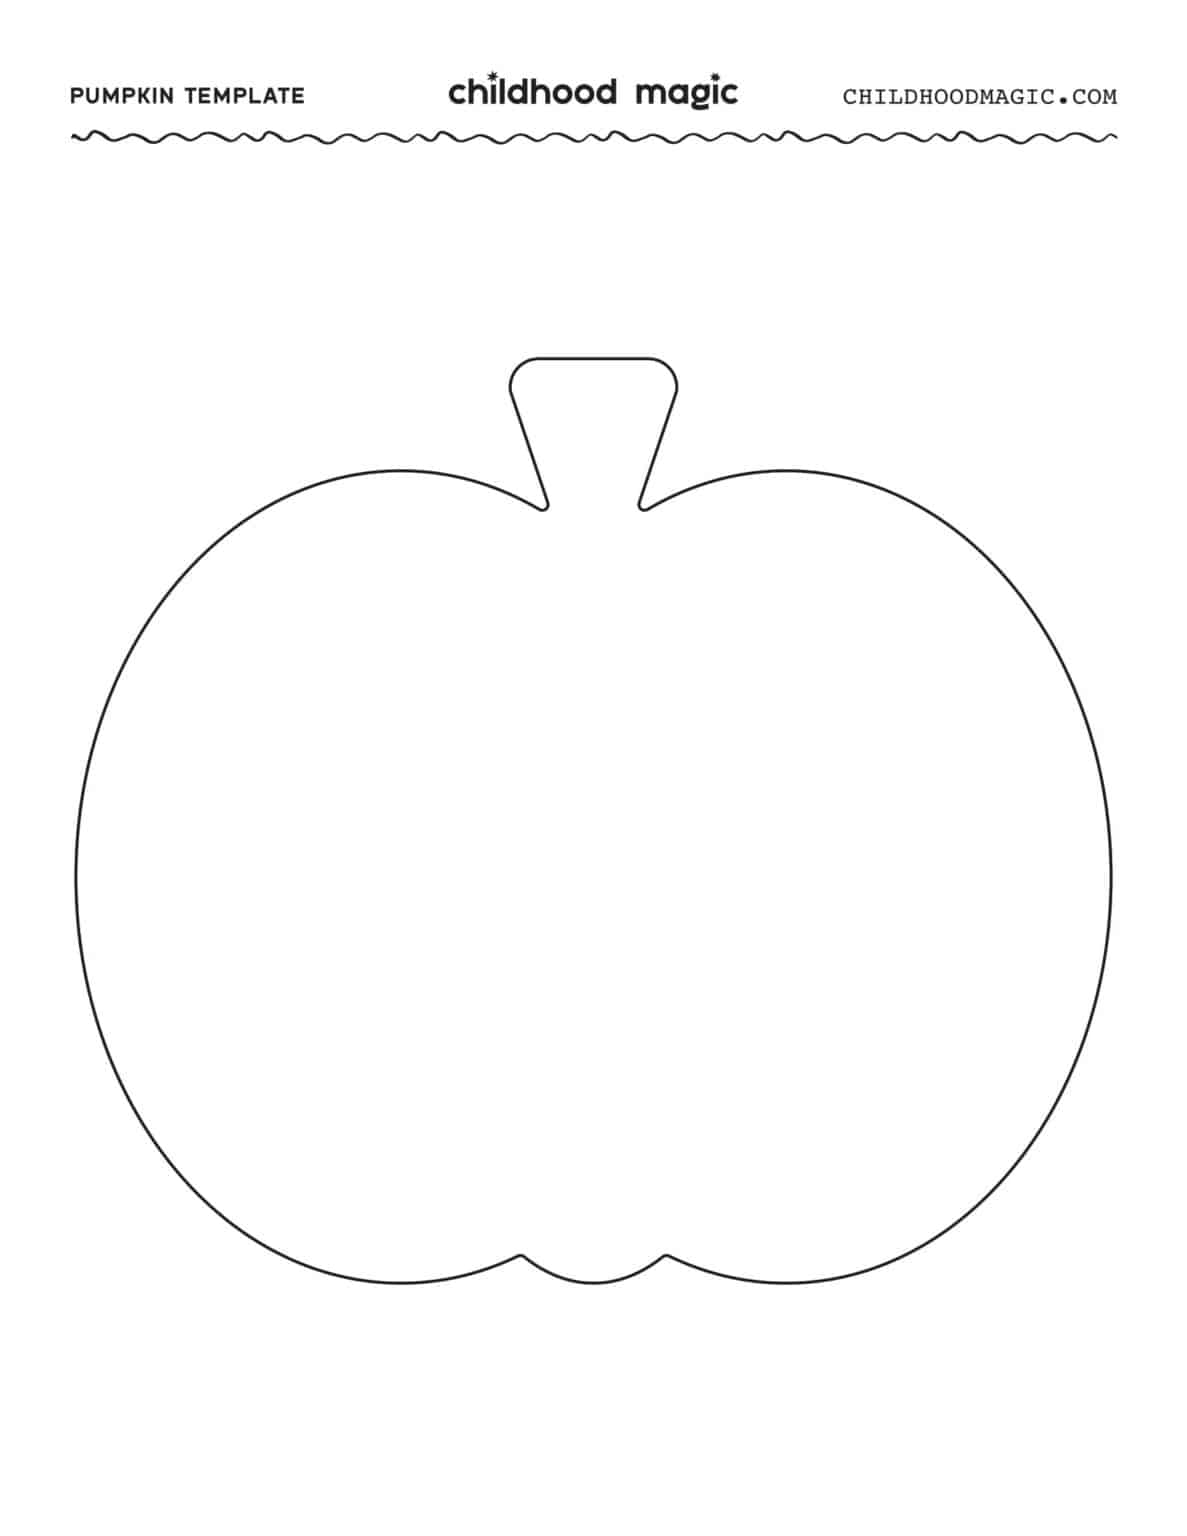 pumpkin-outline-a-free-printable-template-childhood-magic